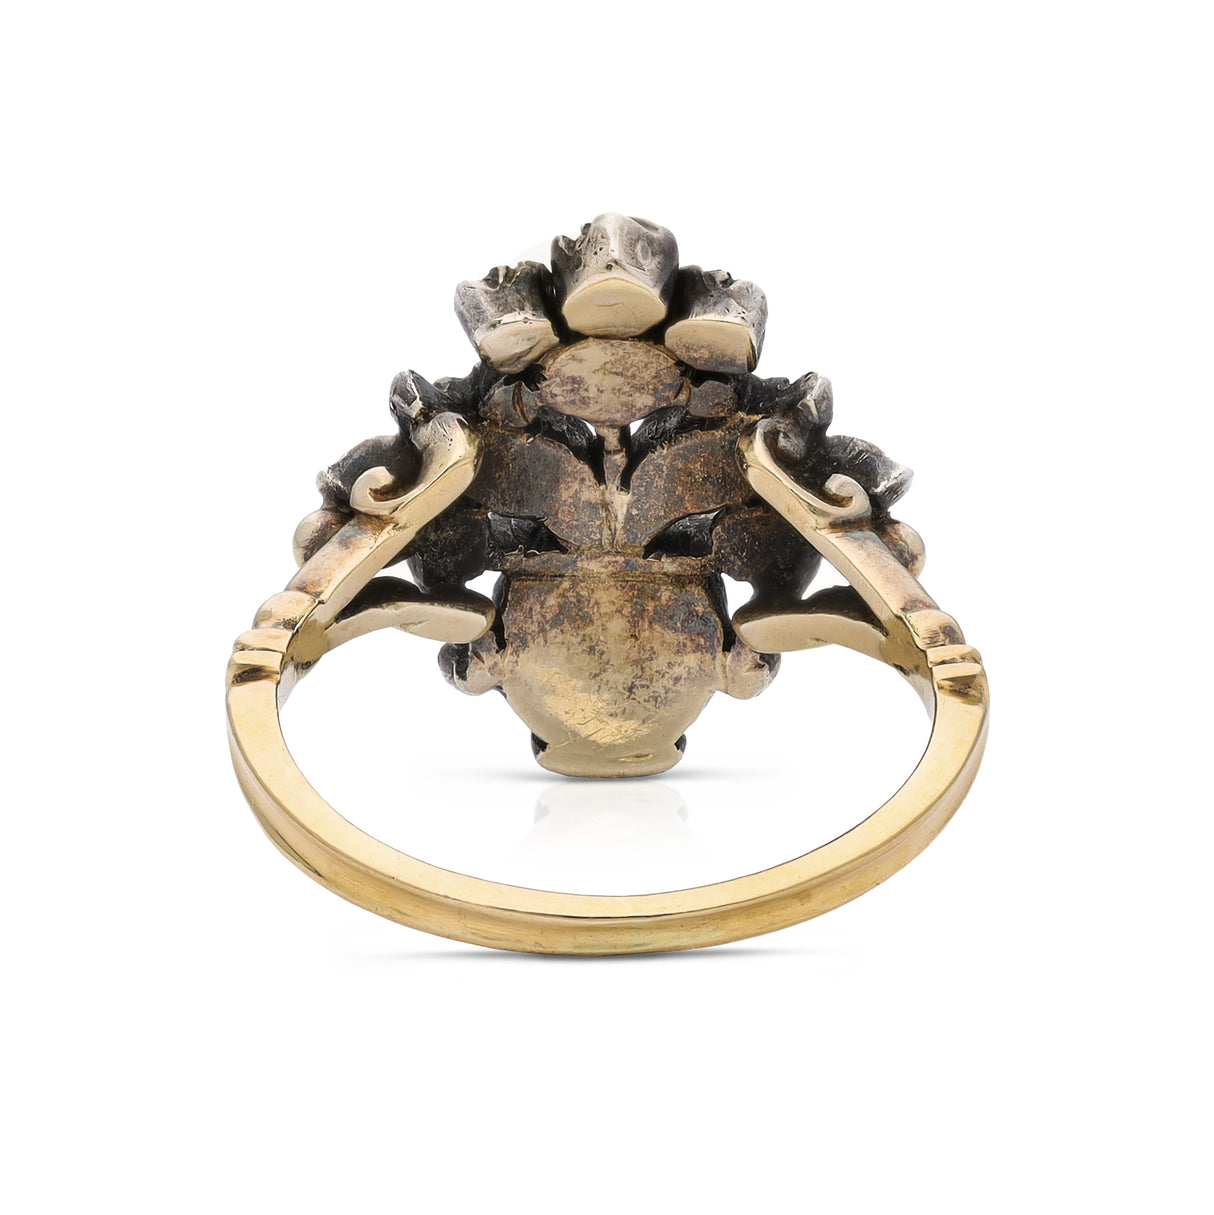 Antique Giardinetti sapphire ring, rear view.